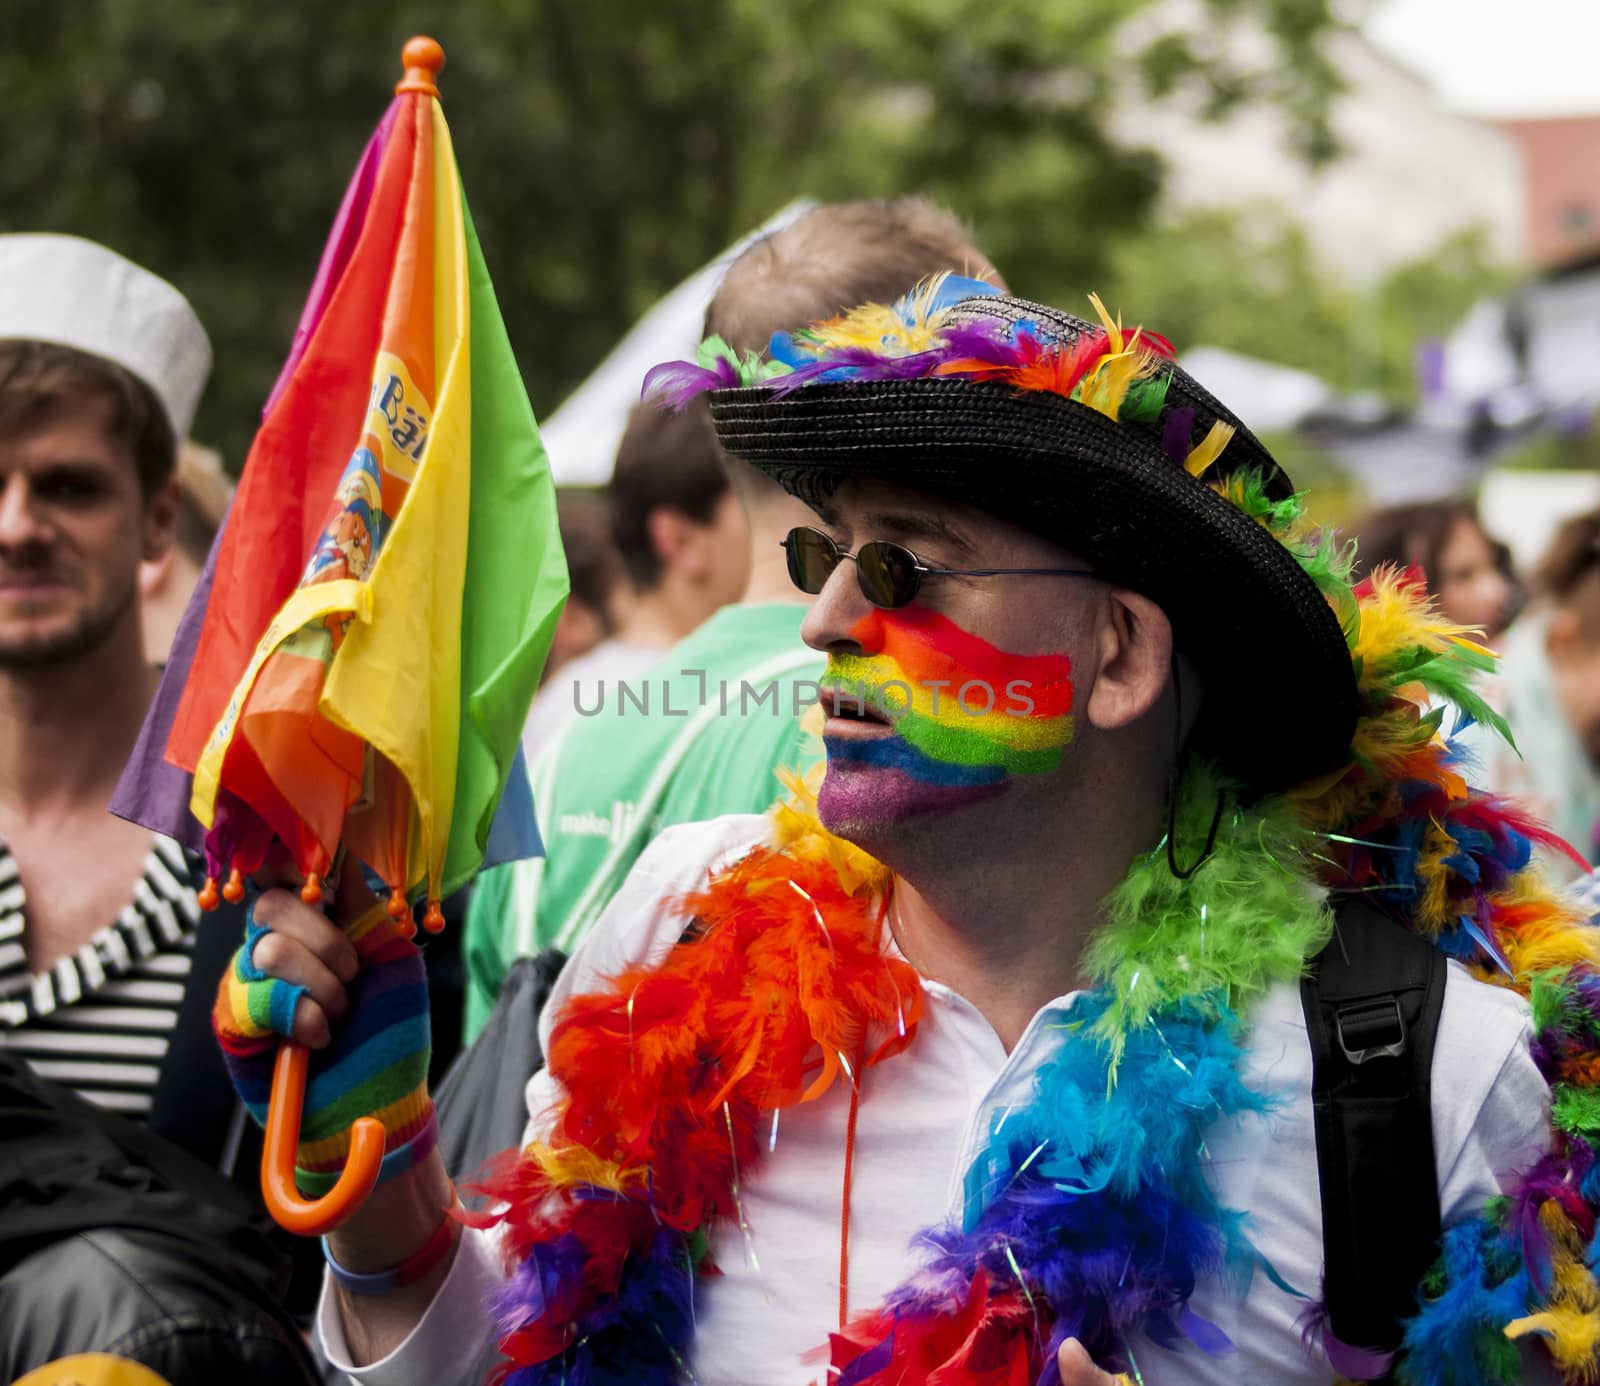 Elaborately dressed man during gay pride parade by MarekSzandurski